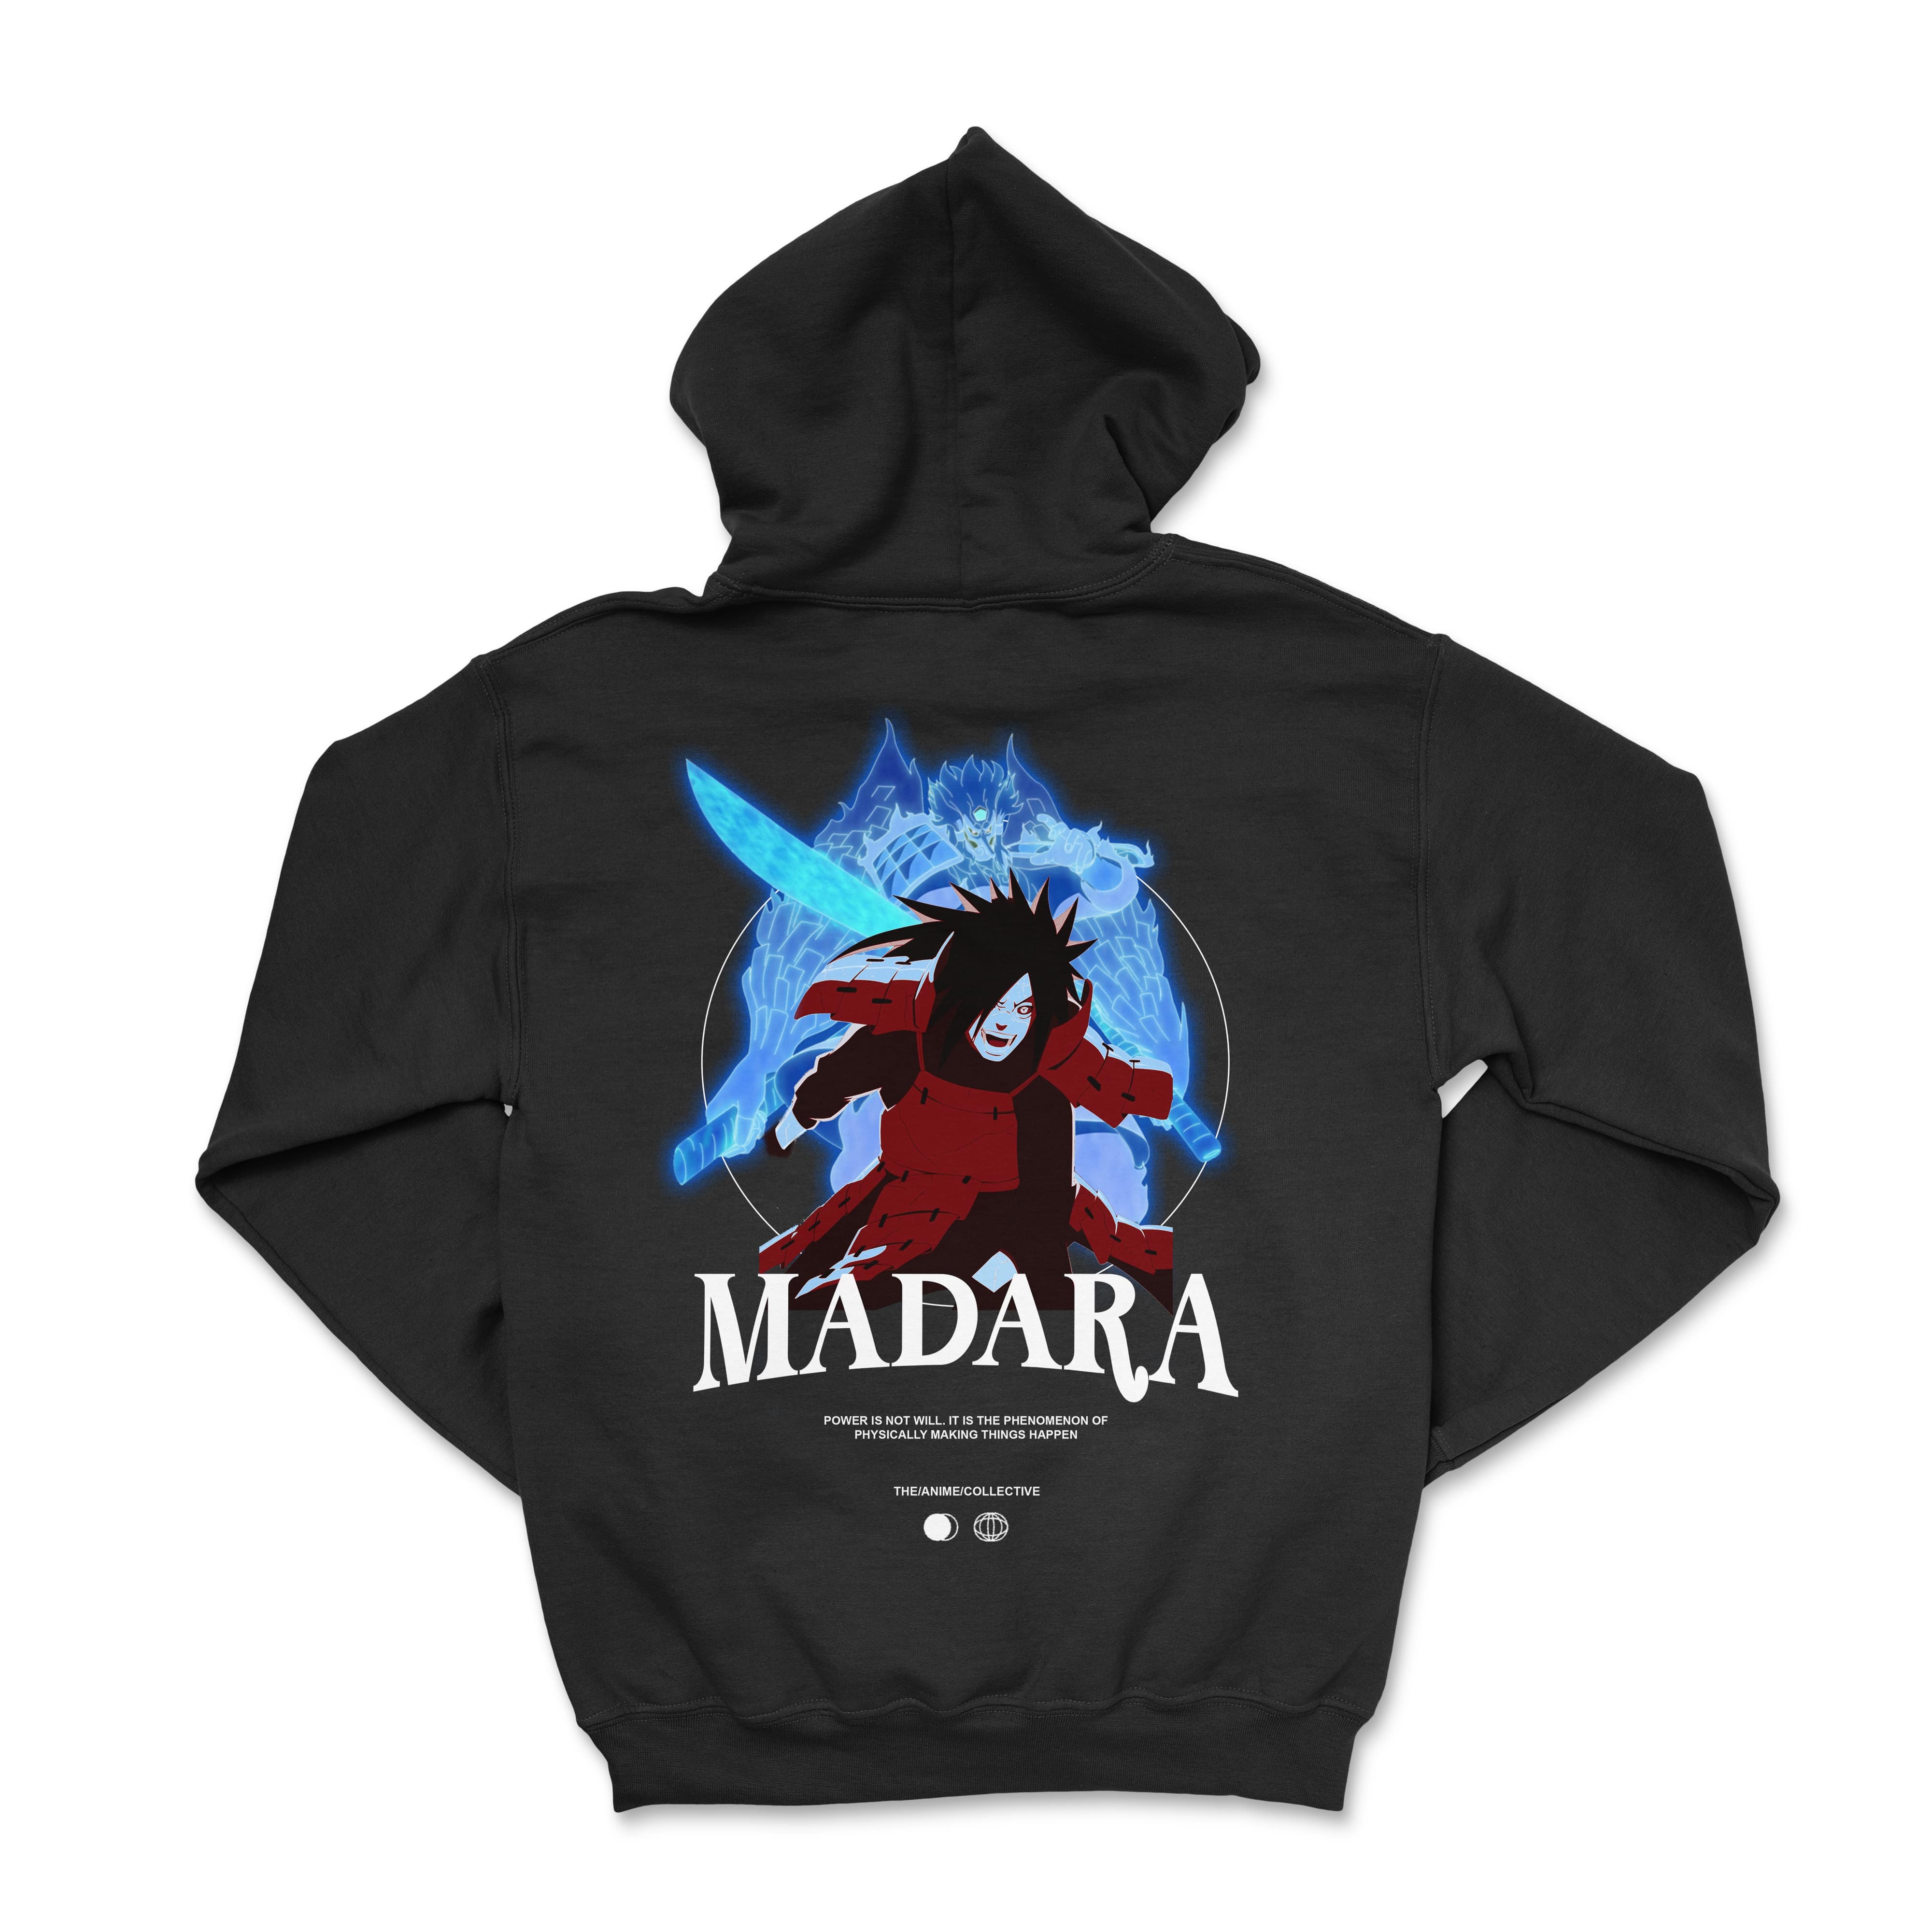 Uchiha Madara "Power" Hoodie | Naruto Shippuden